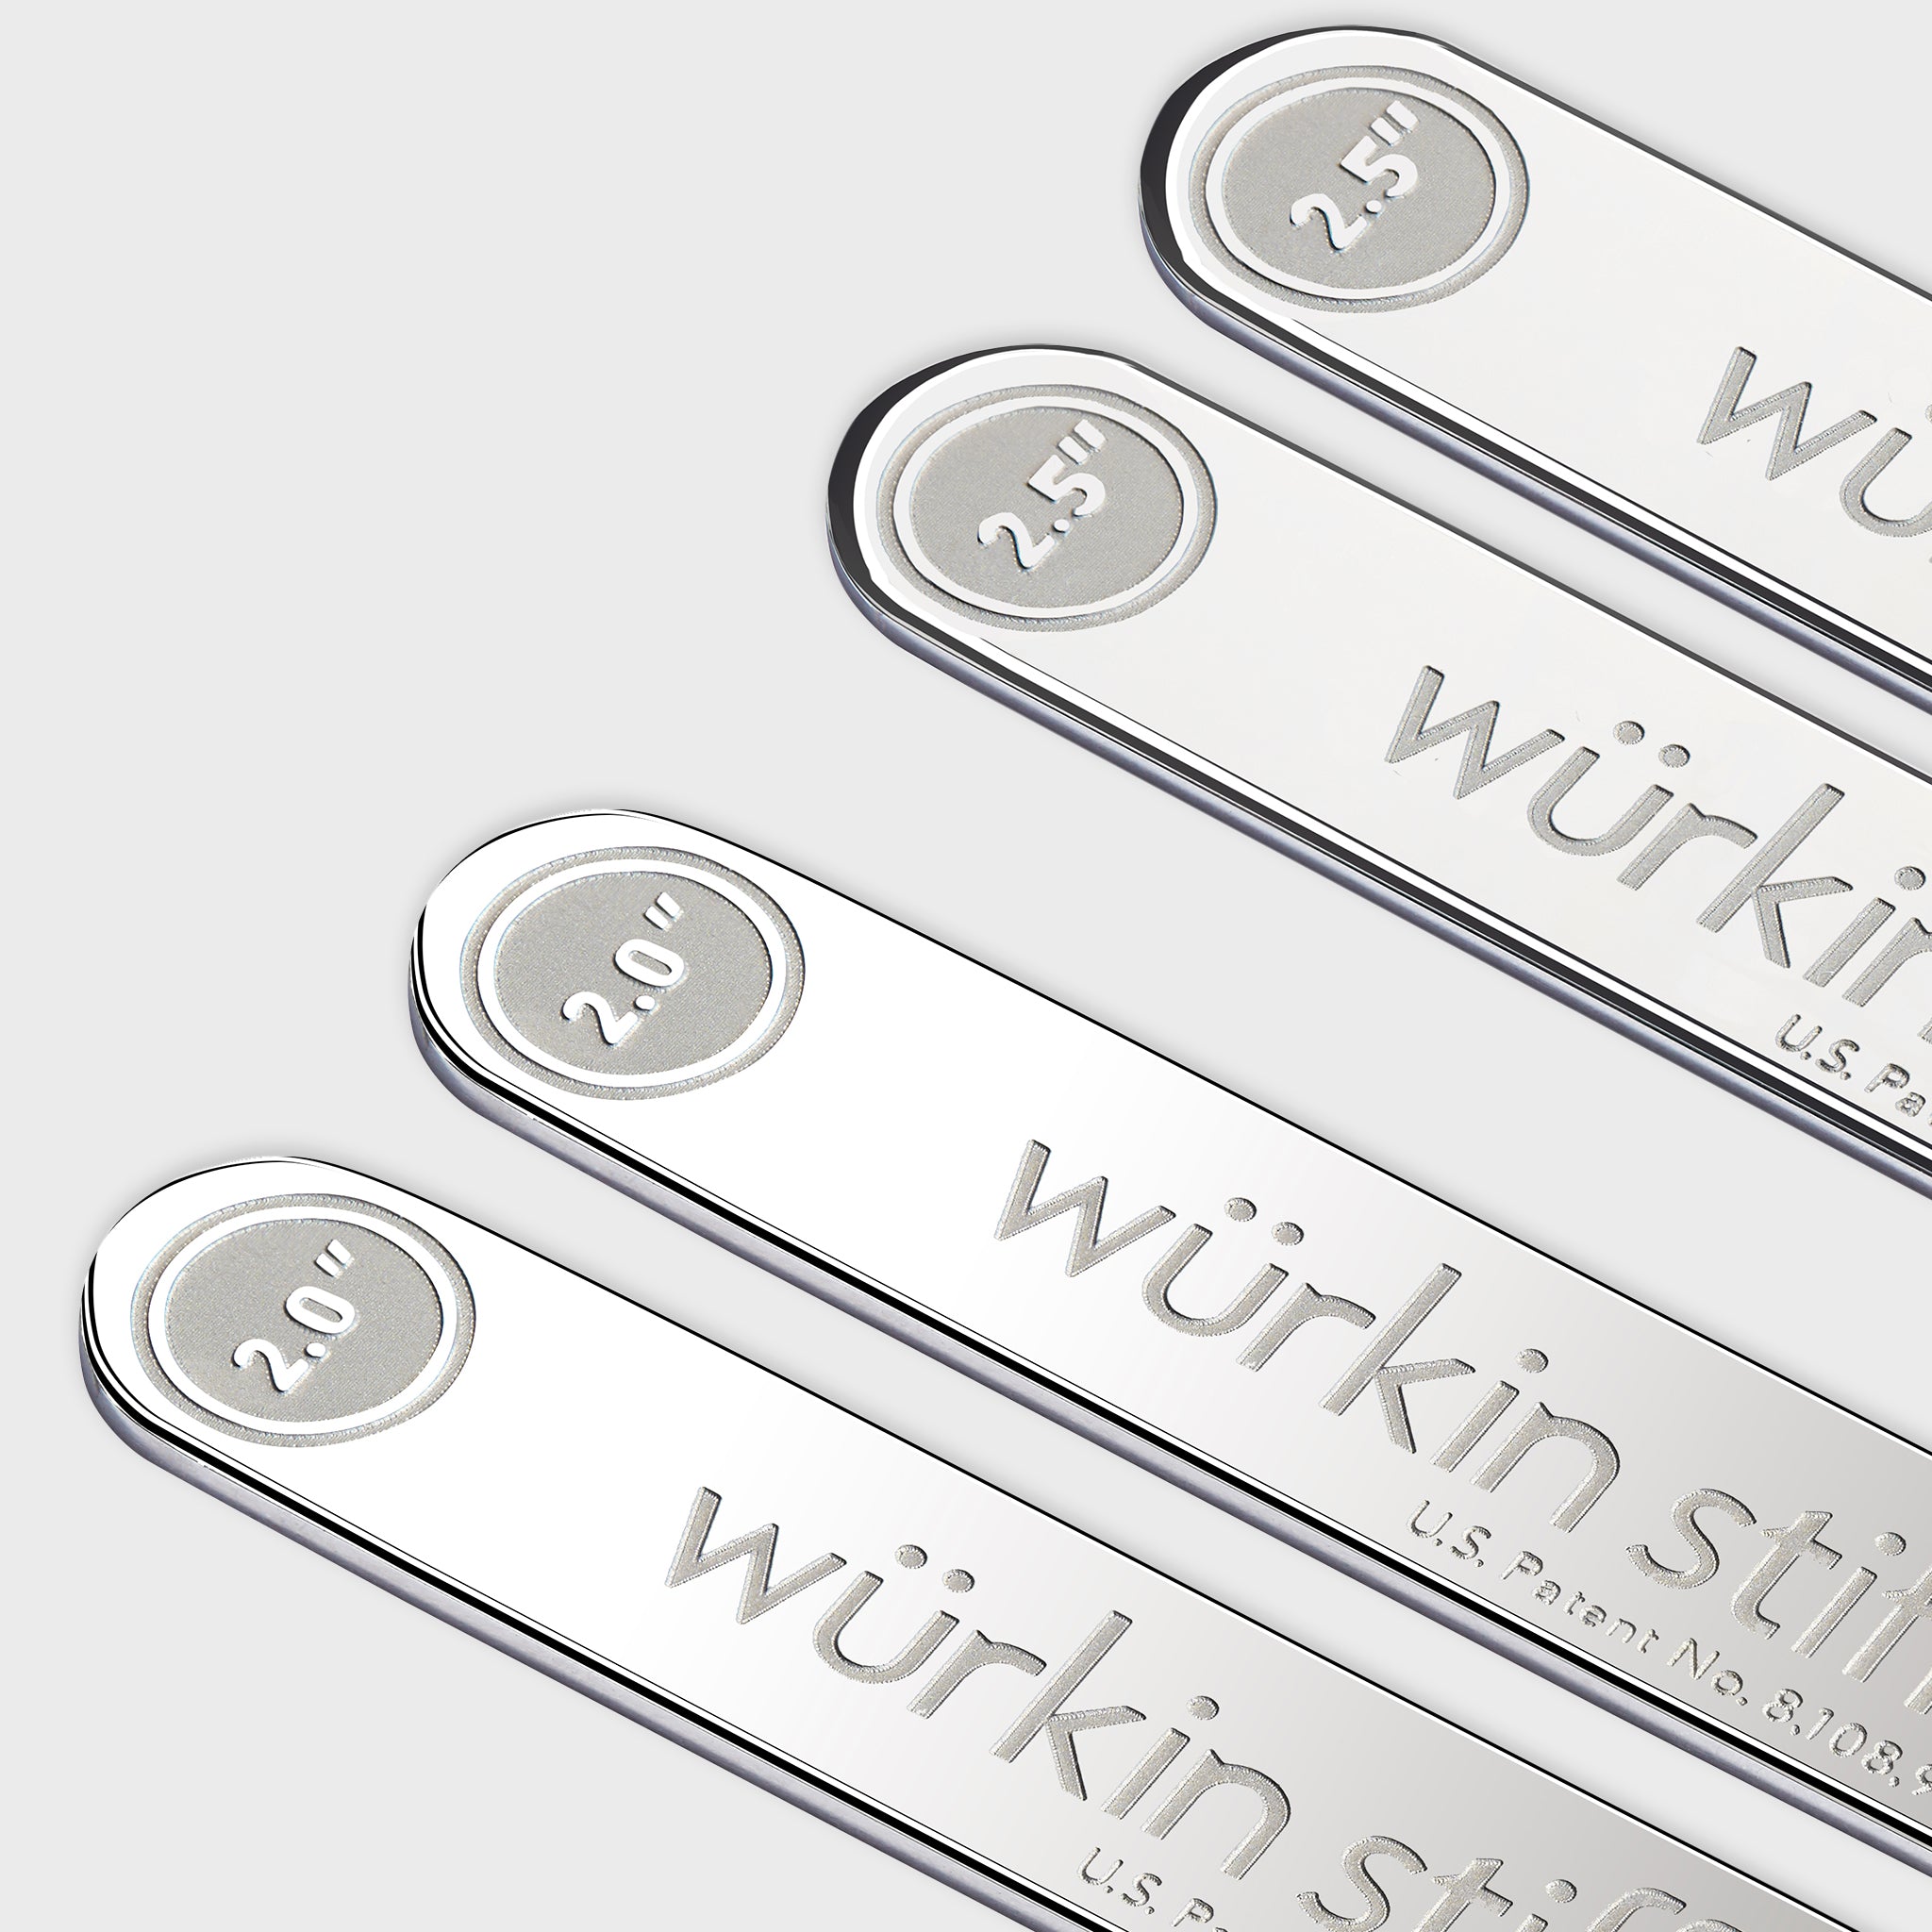 Würkin Stiffs Stick-N-Stays Polo Shirt Magnetic Collar Stays